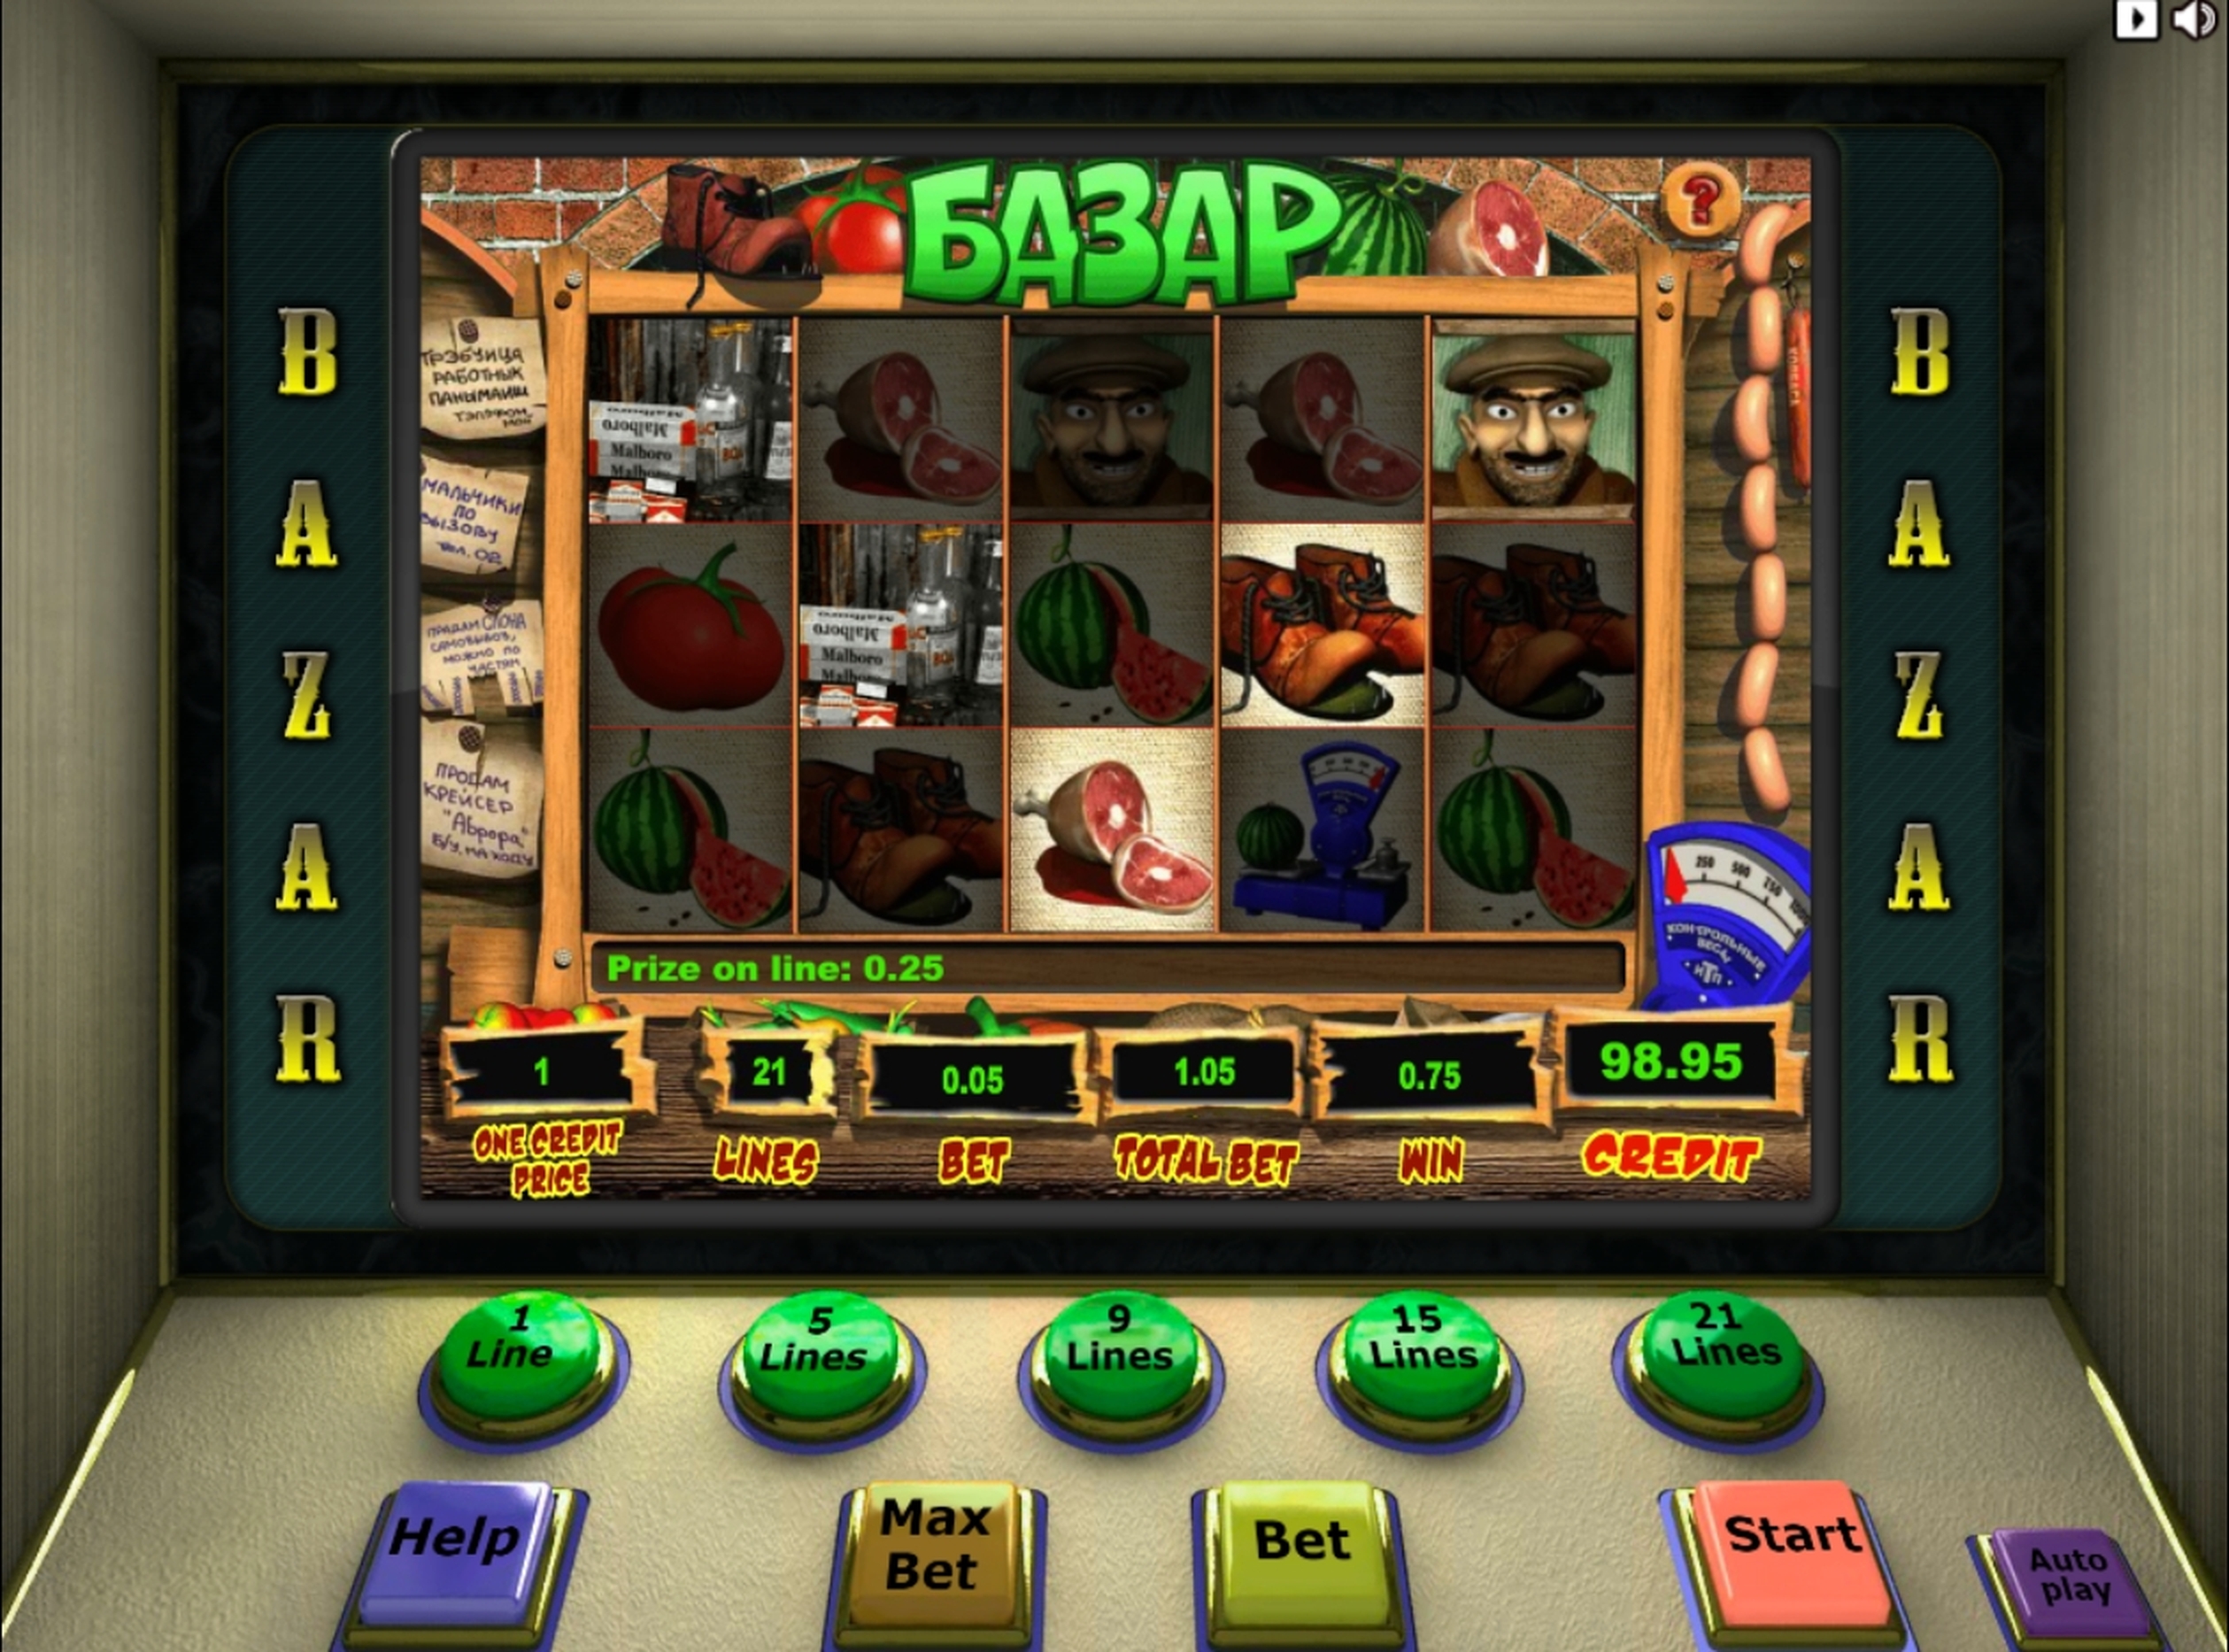 Win Money in Bazar Free Slot Game by Unicum